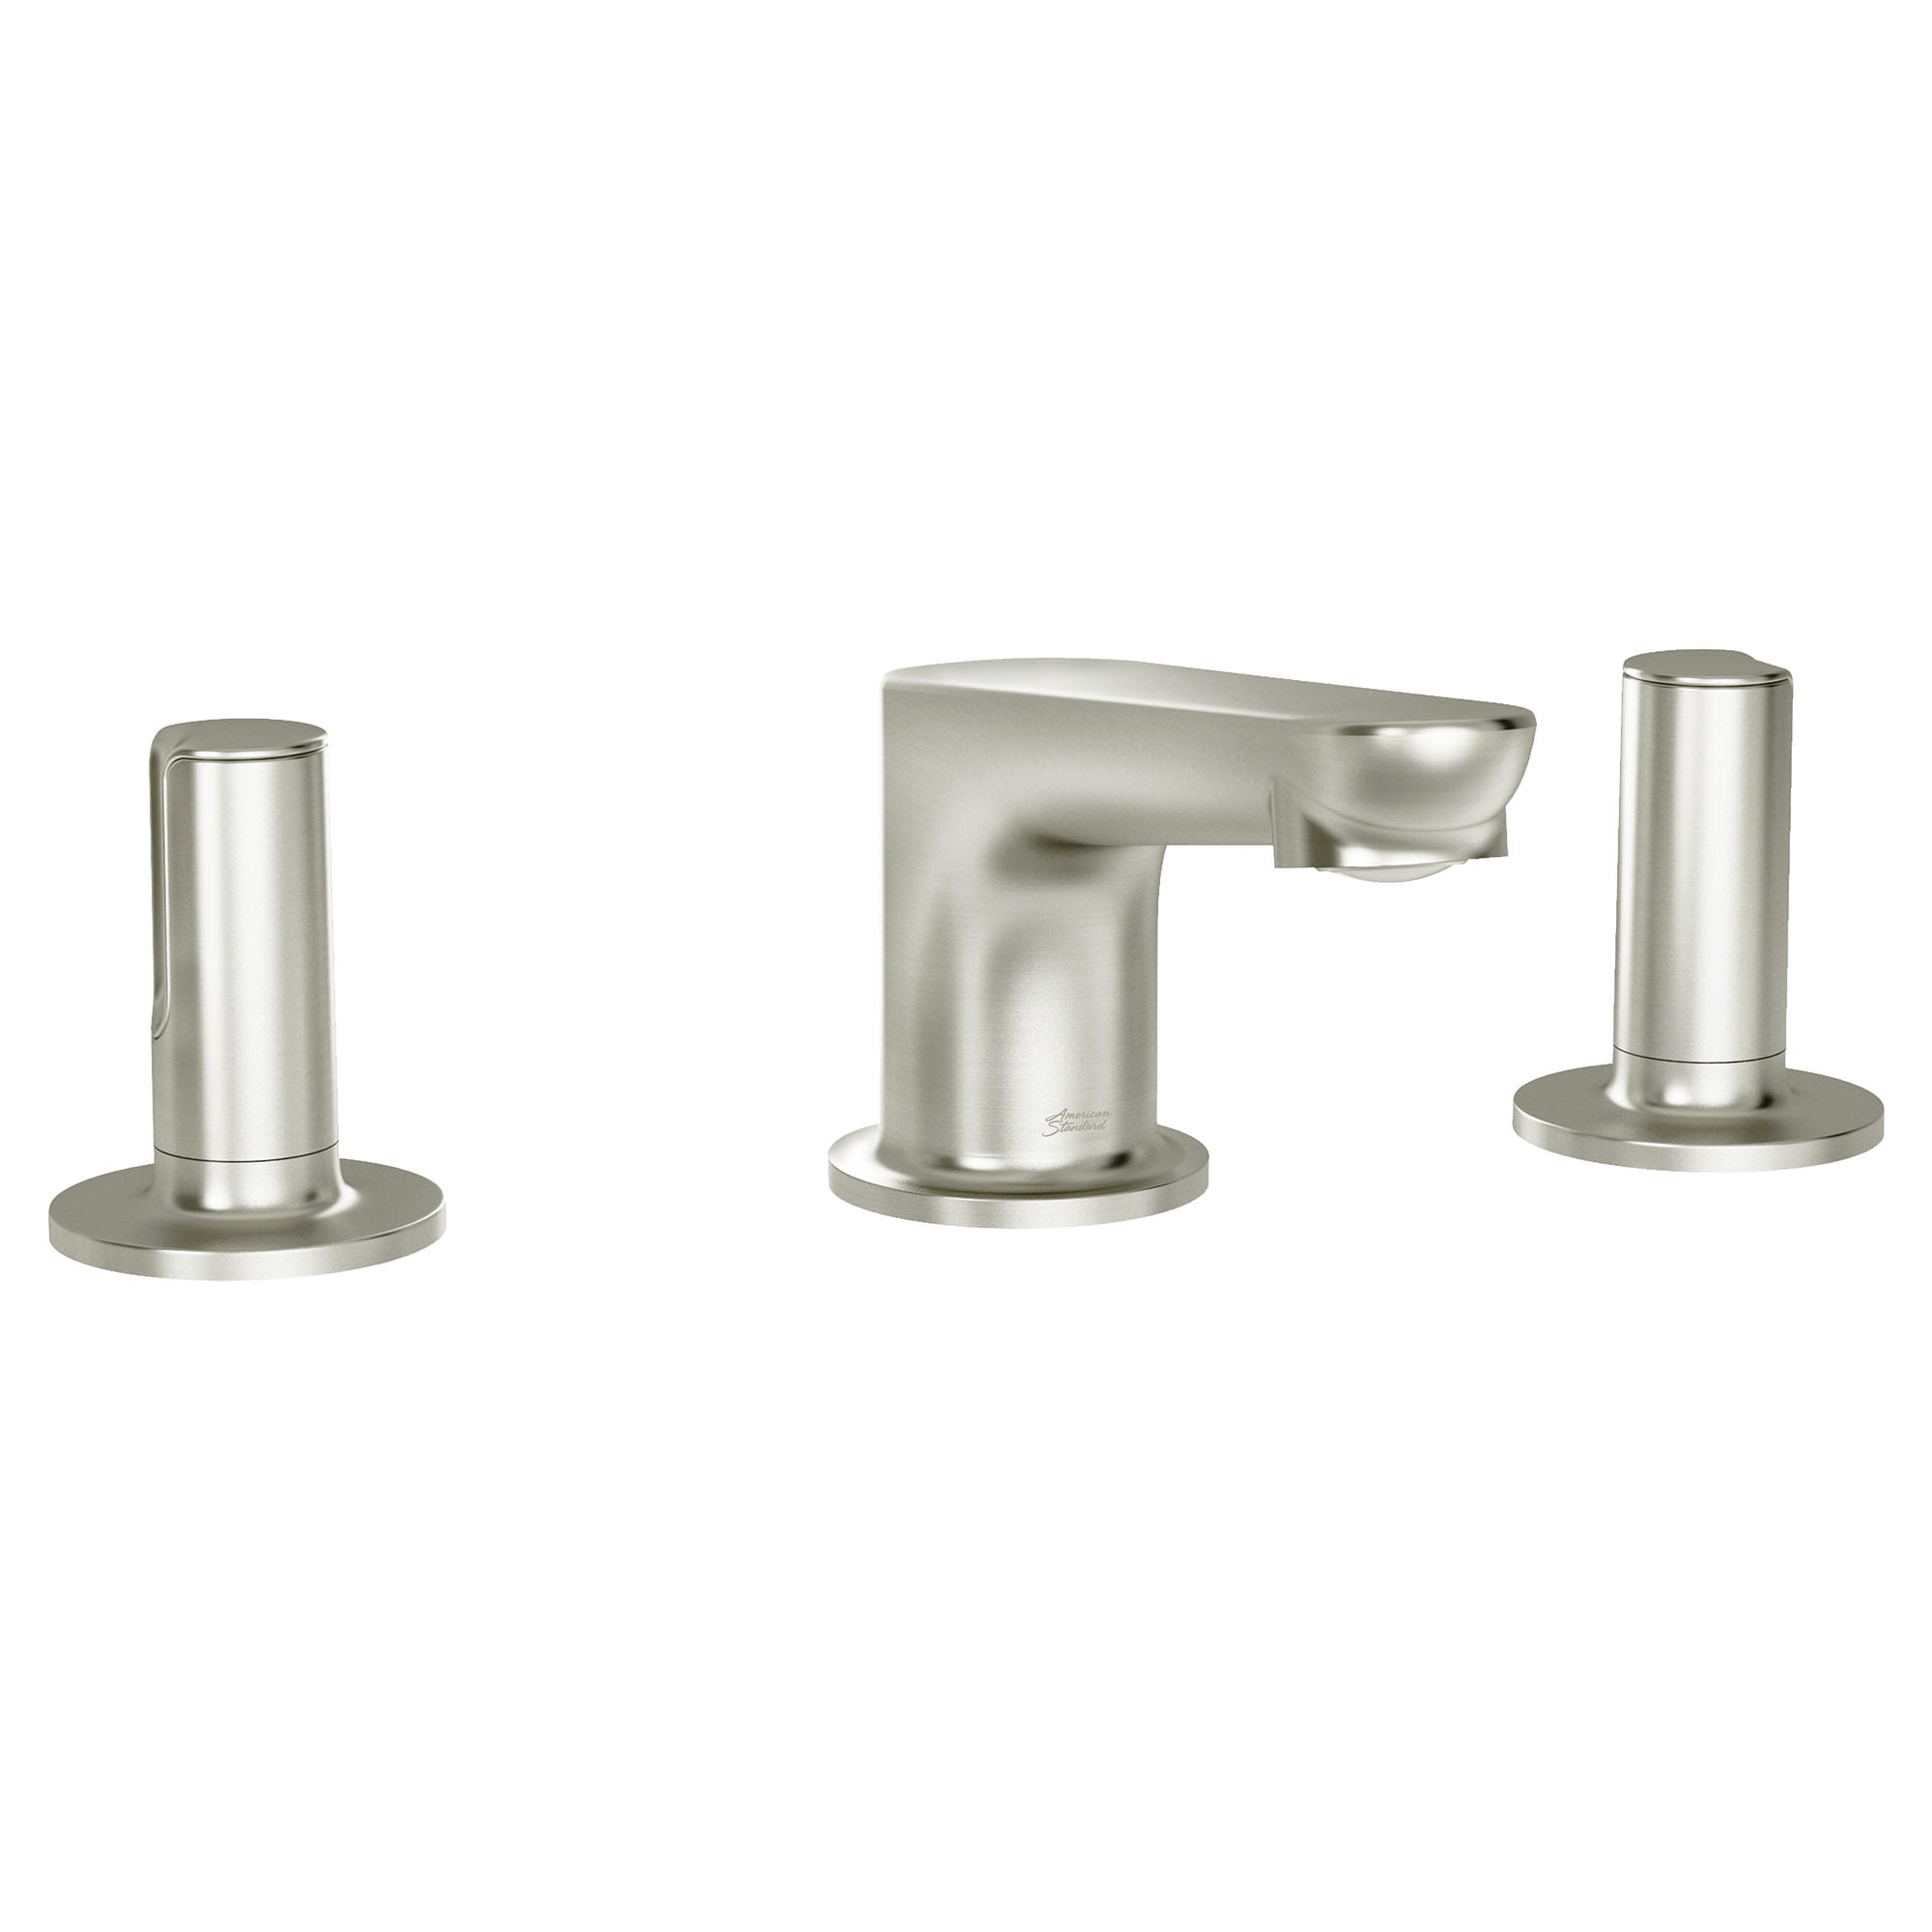 Studio® S Widespread Low Spout 2-Handle Bathroom Faucet 1.2 gpm/4.5 L/min With Knob Handles